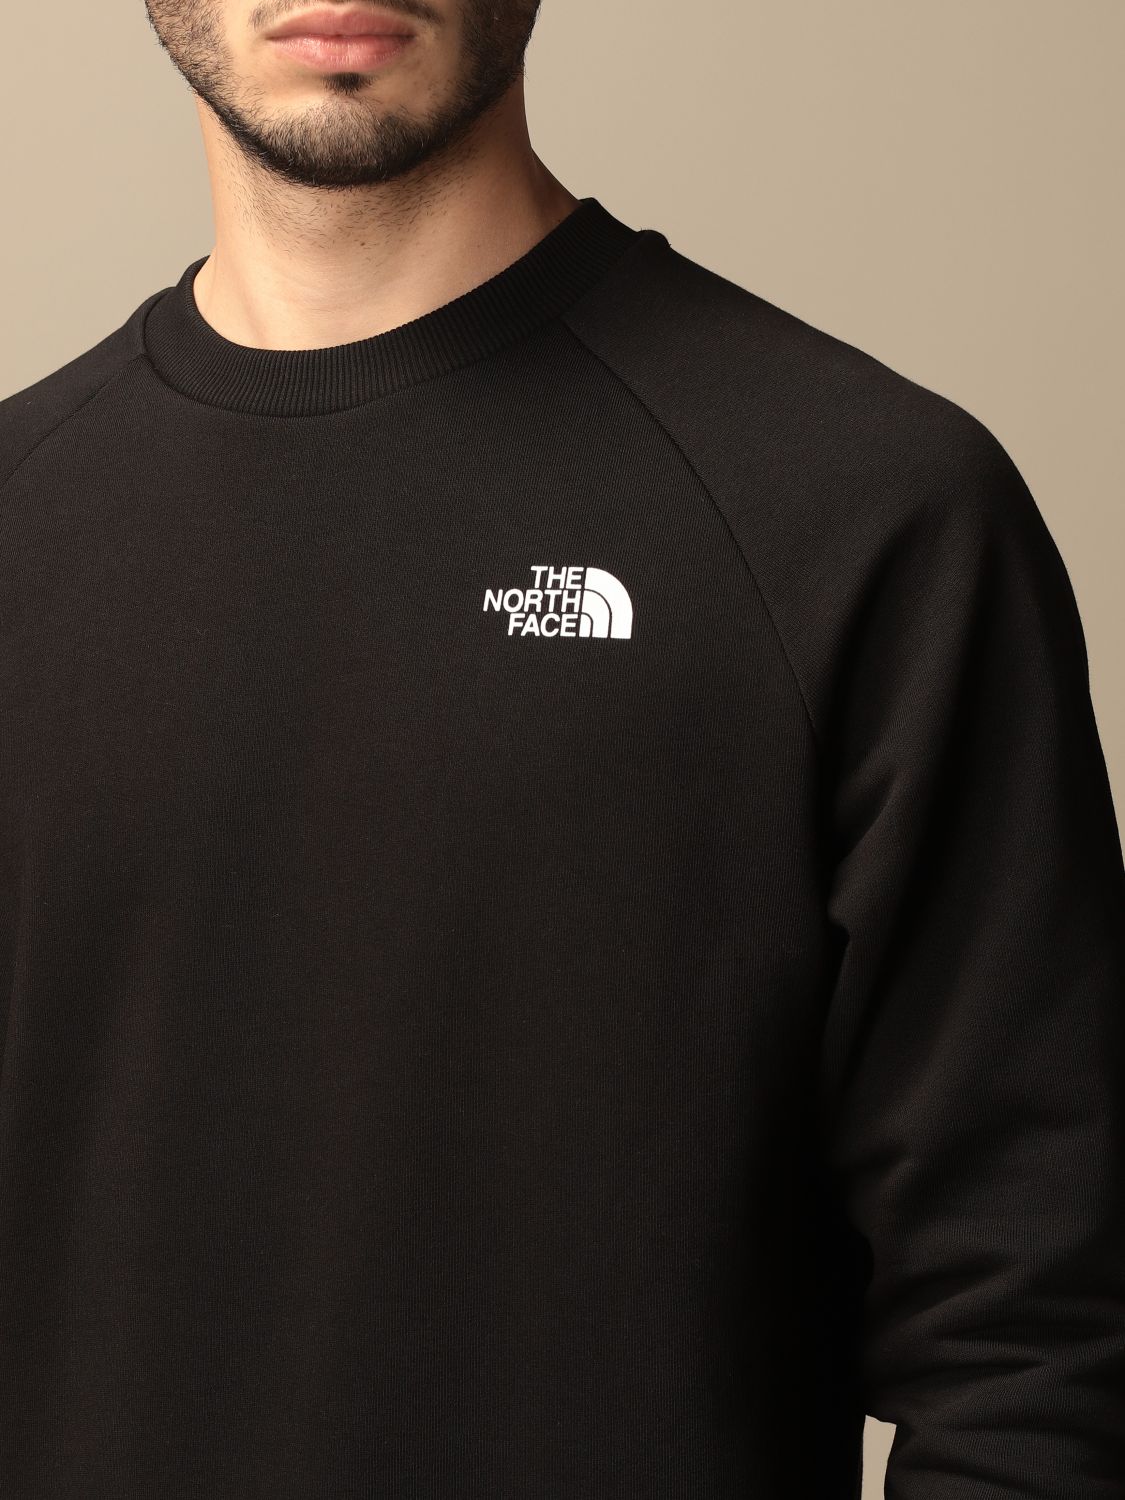 North Face Hoodless Sweatshirt On Sale, 65% OFF | fitk-unsiq.ac.id